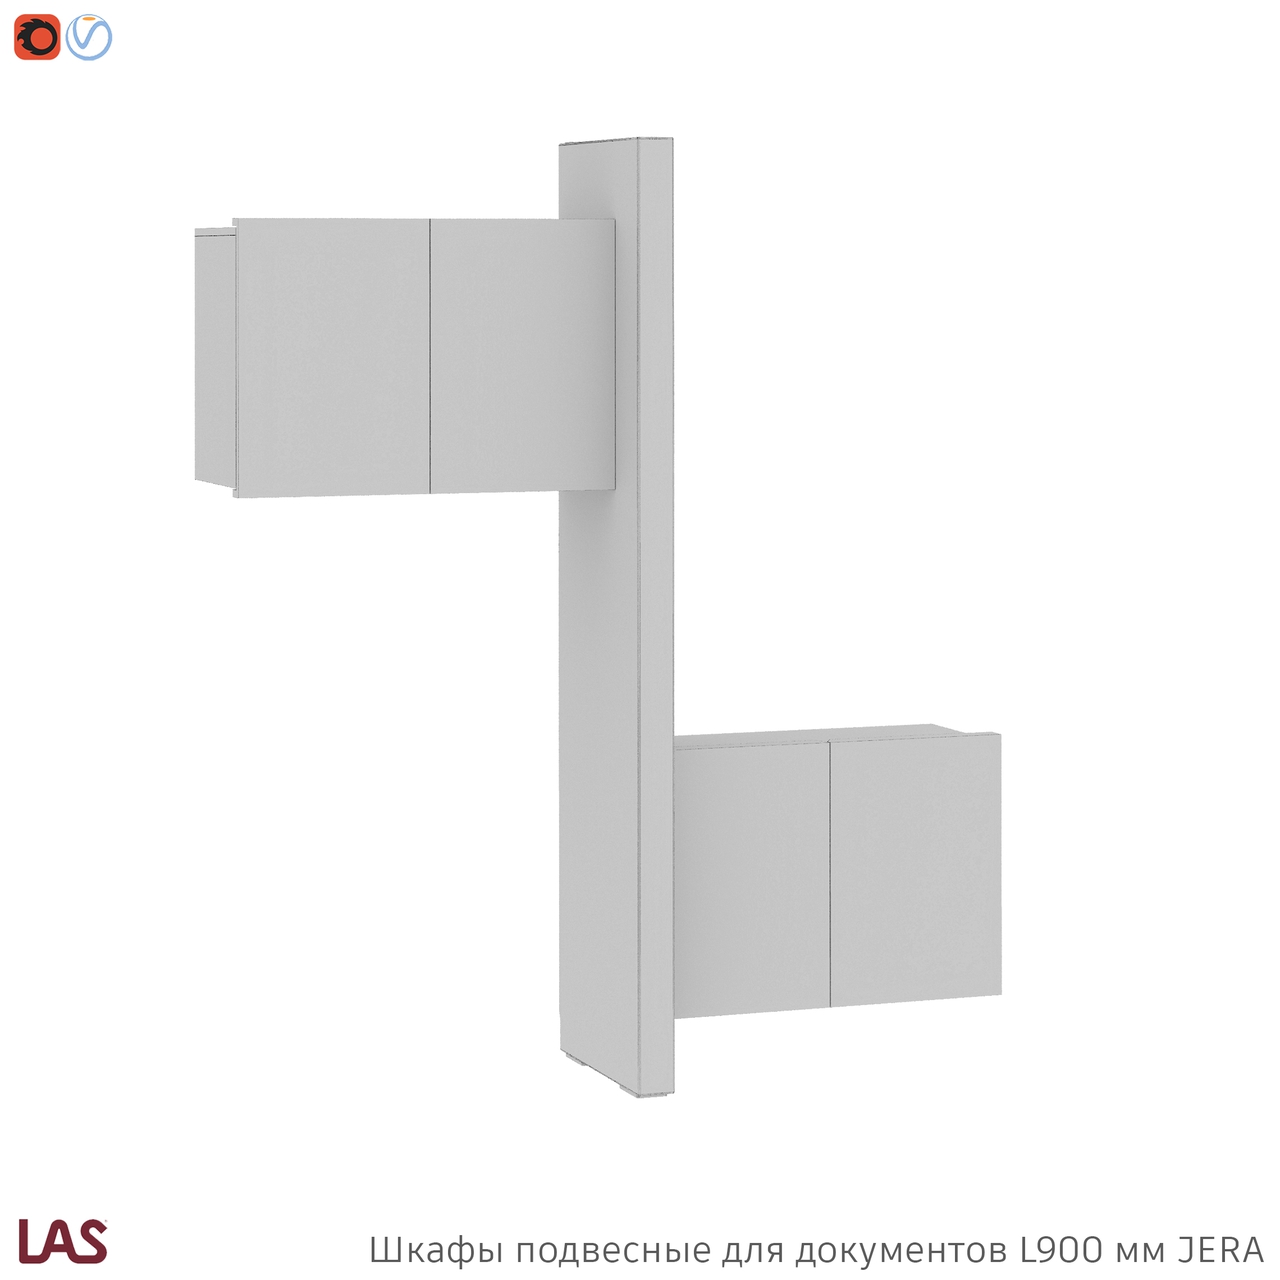 Превью G 3D-модели подвесного шкафа LAS Jera 159980